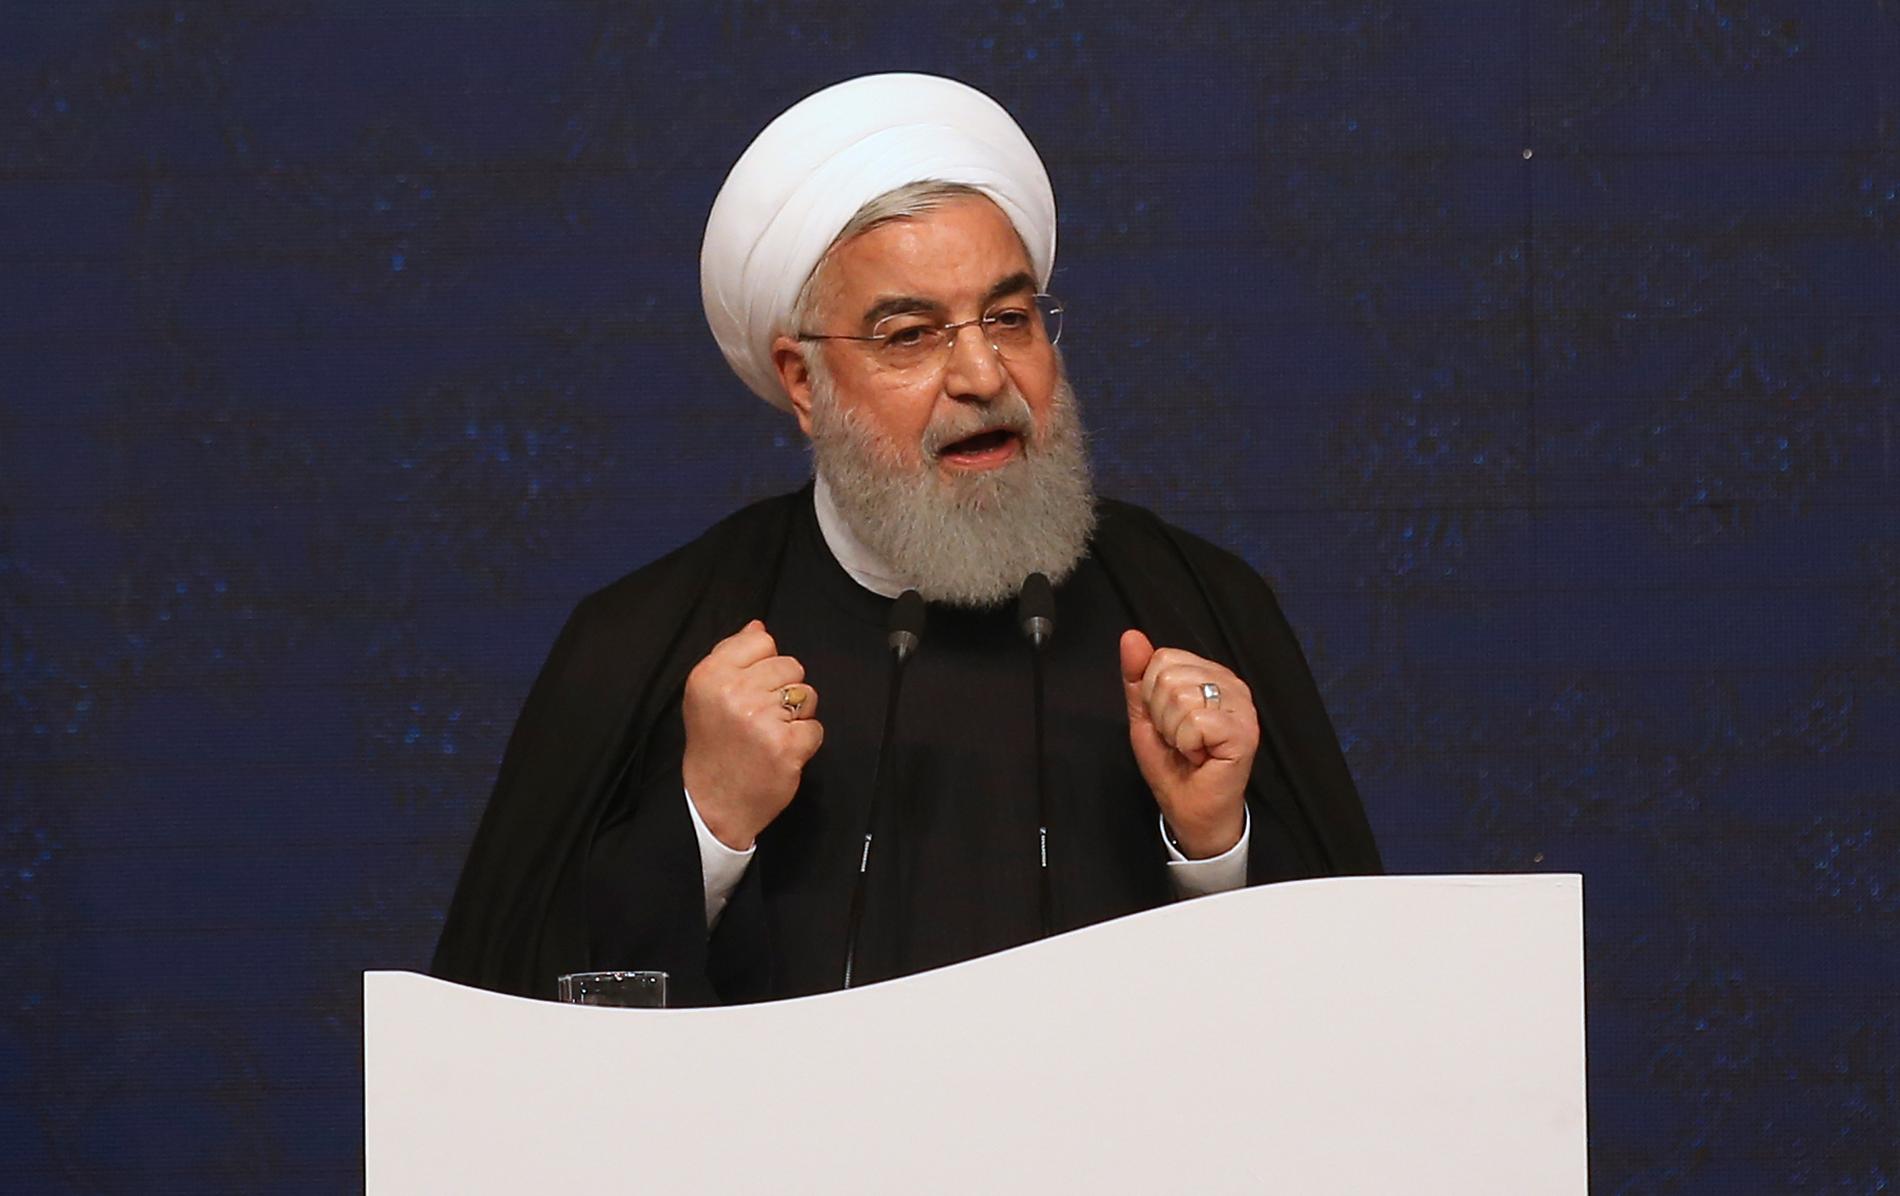 Irans president Hassan Rouhani